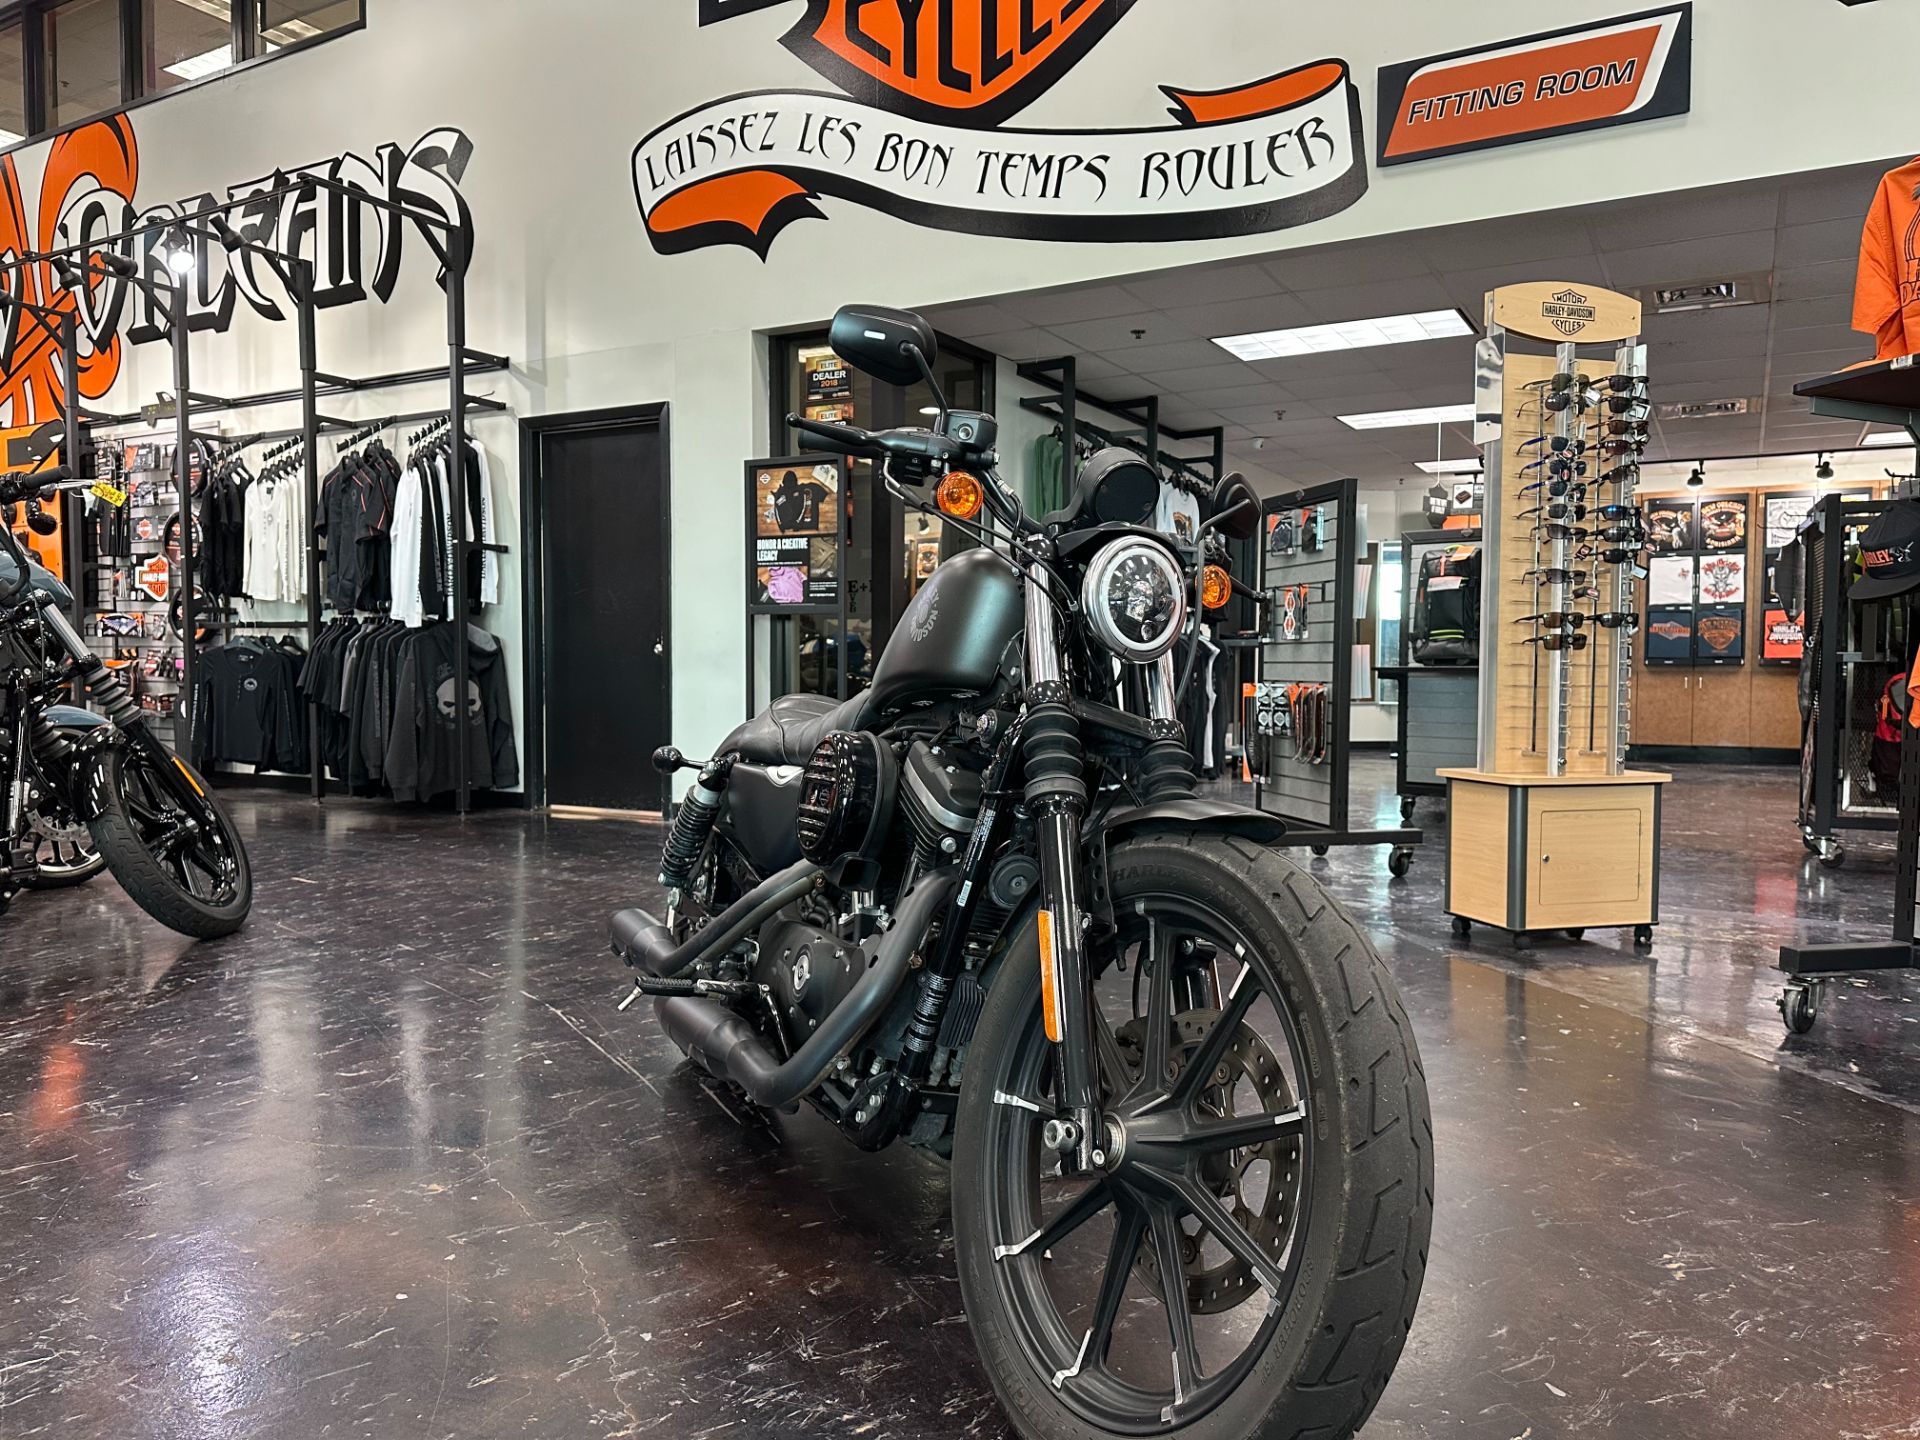 2021 Harley-Davidson Iron 883™ in Metairie, Louisiana - Photo 1